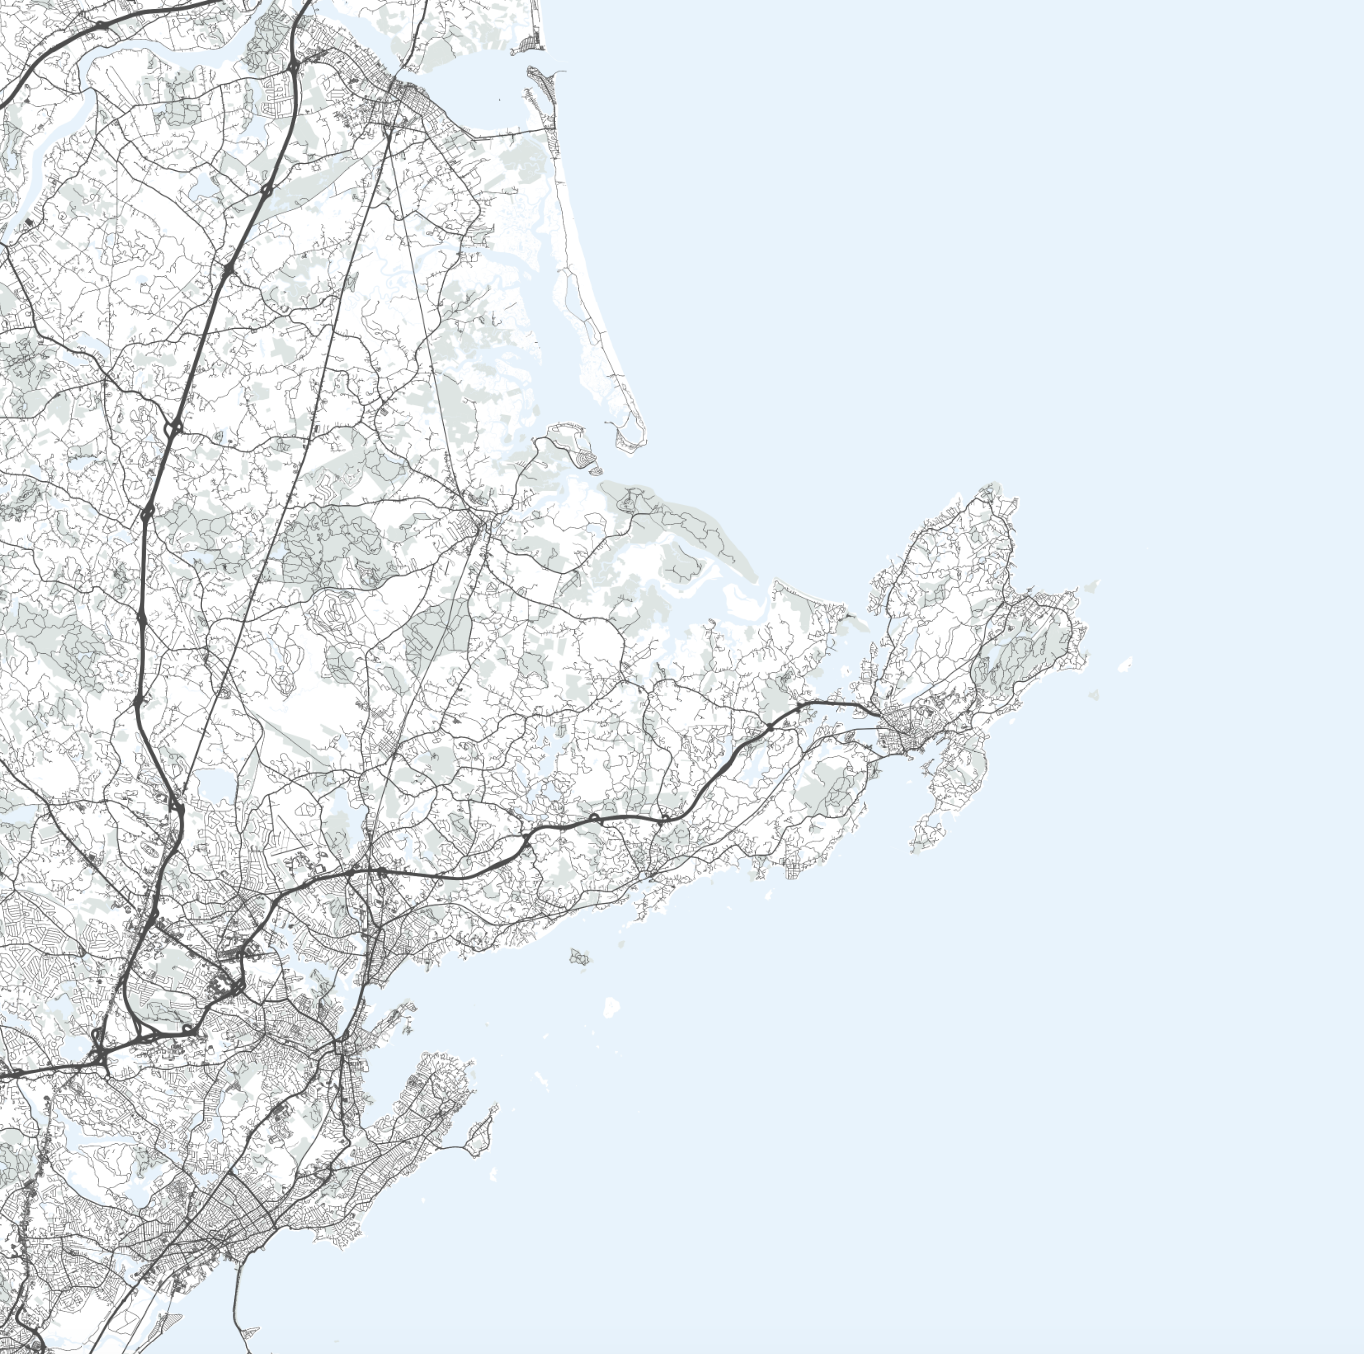 Massachusetts Coast Map Print